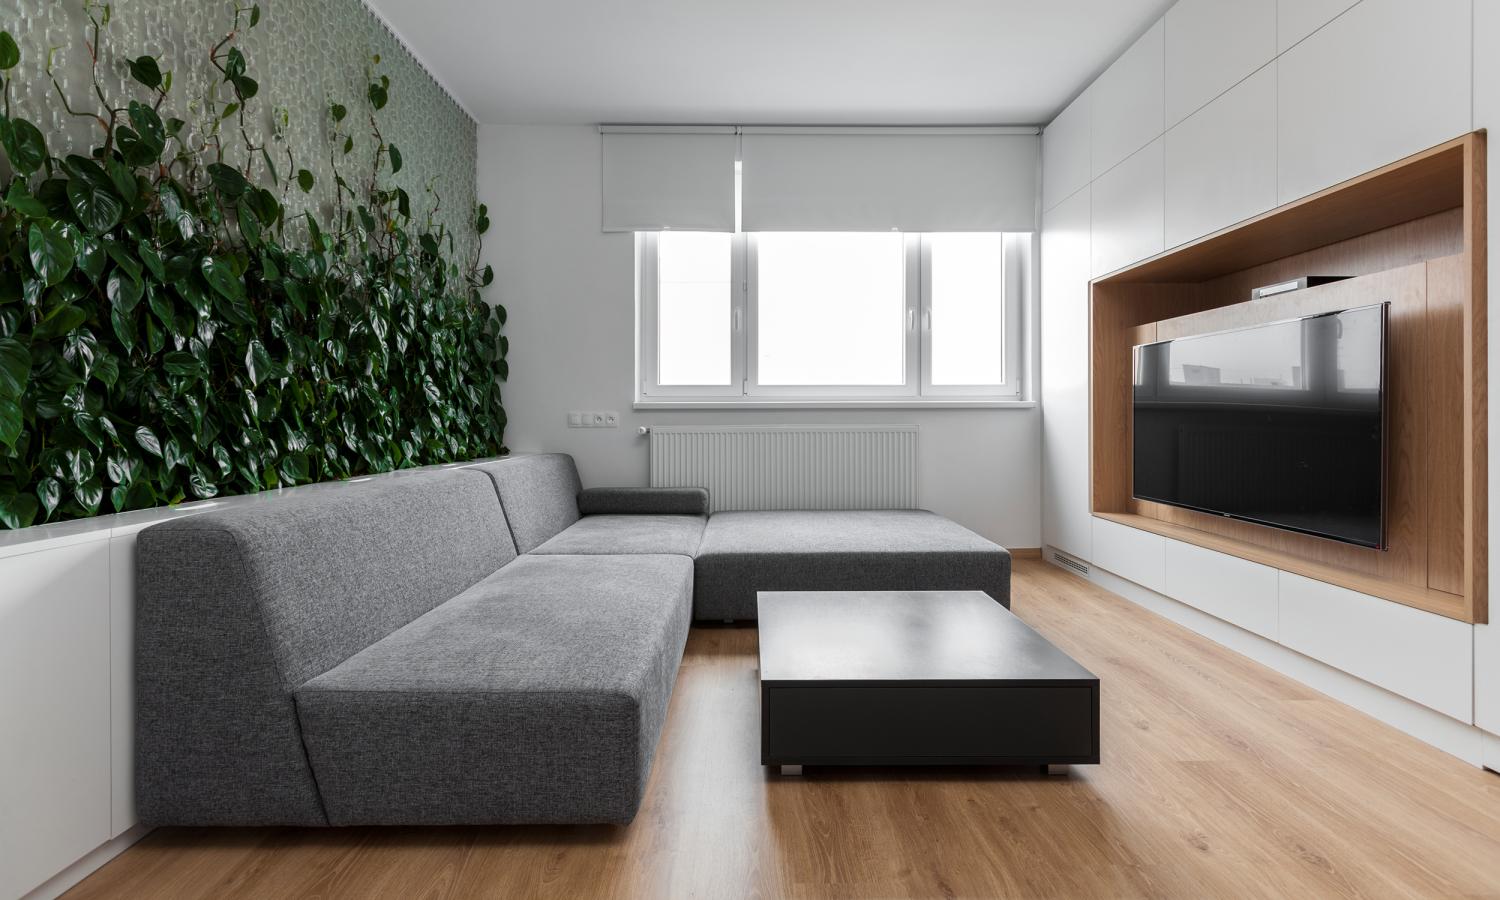 Elegant Apartment Interior Design With Perfect Layout Arrangement - RooHome